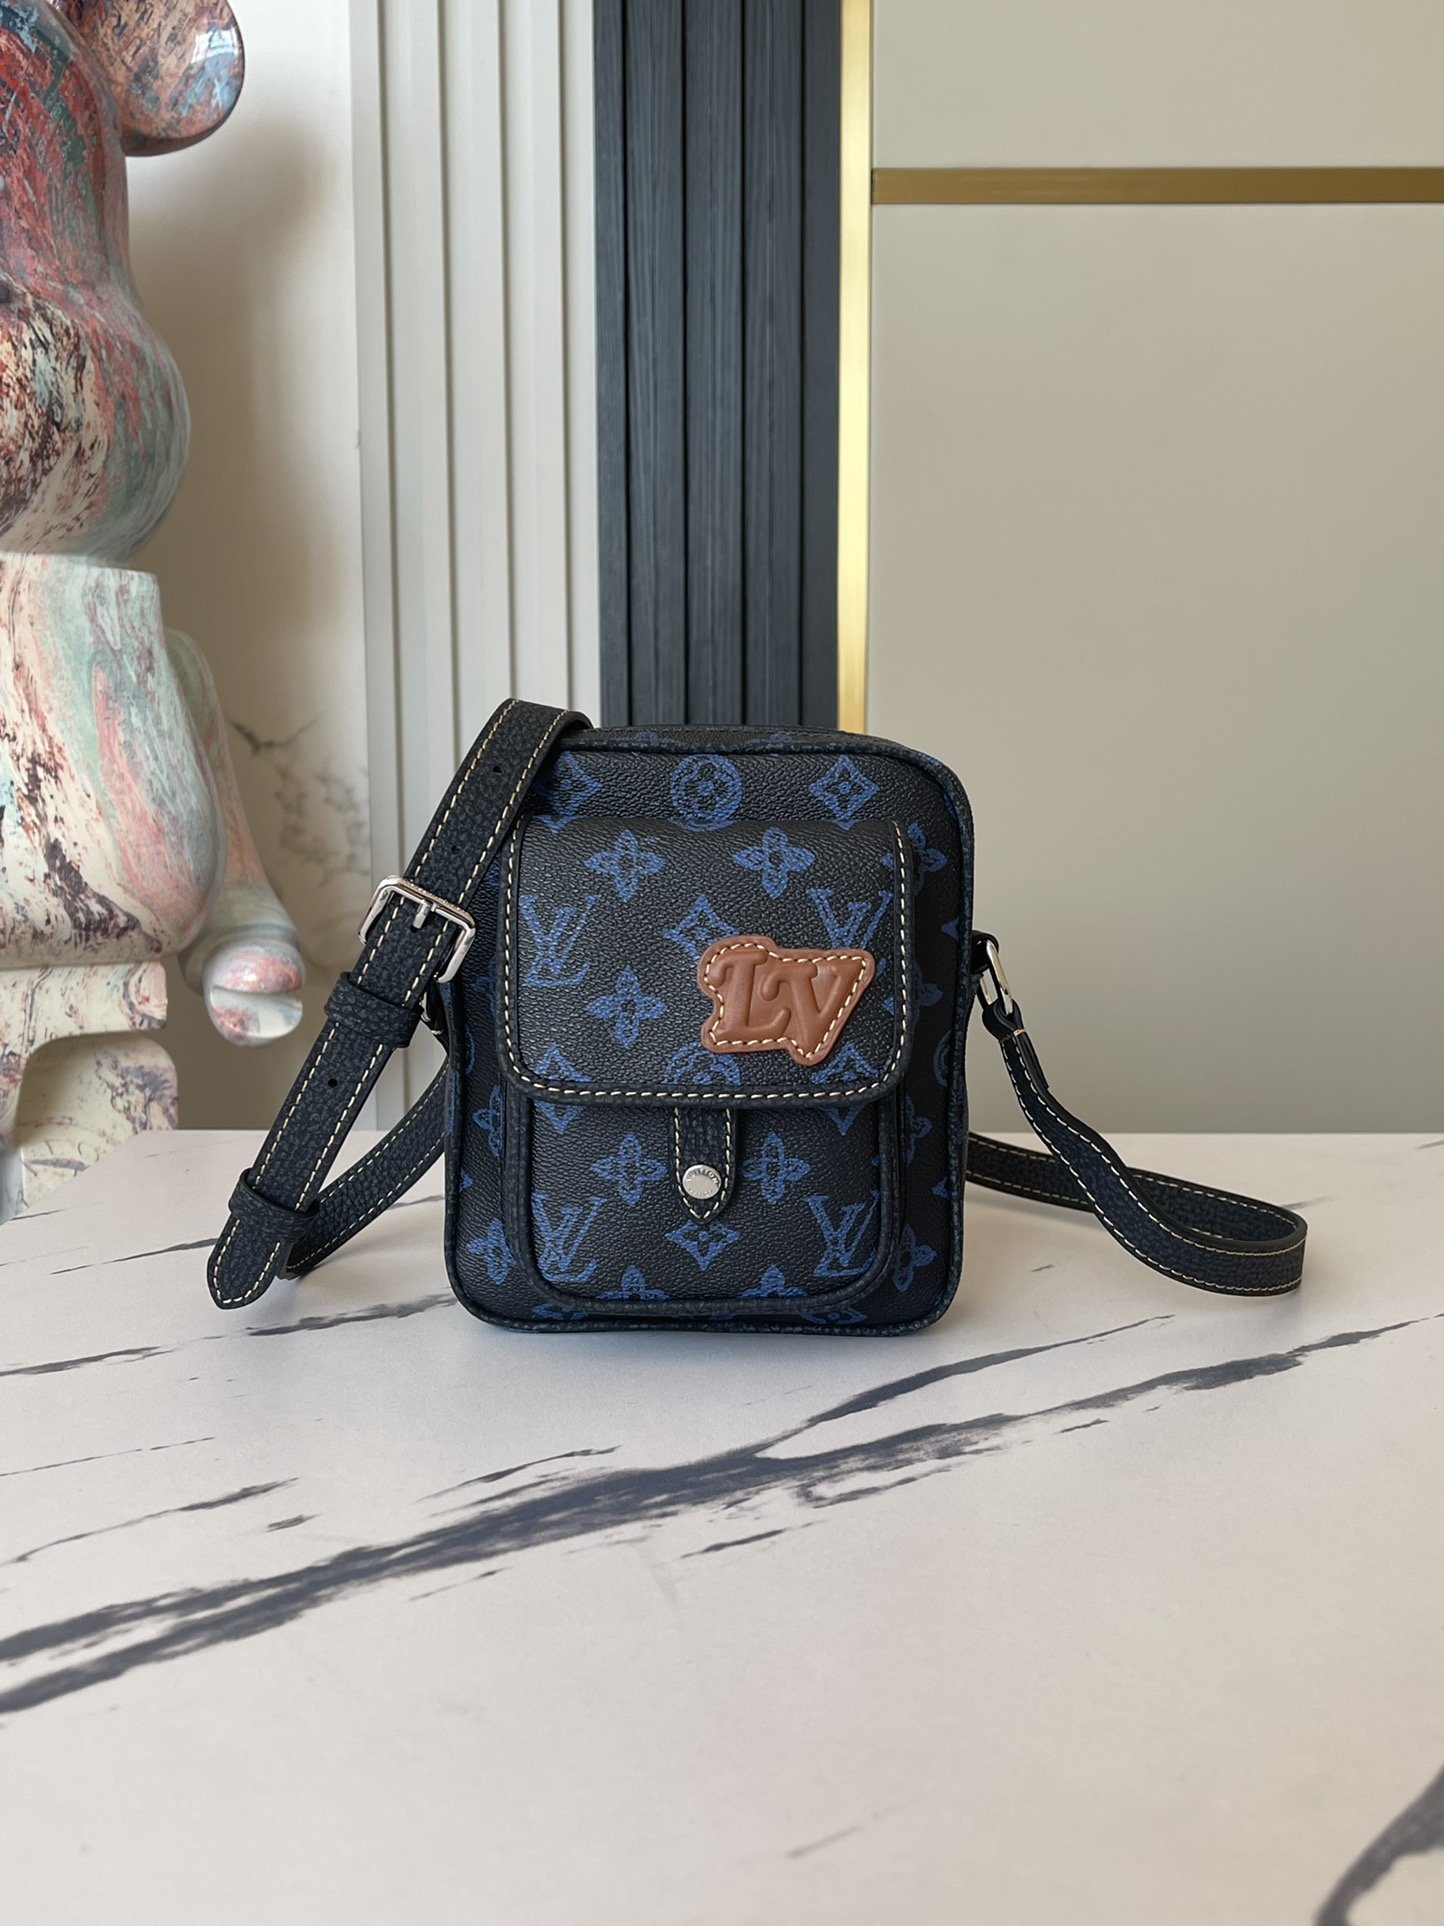 A bag ChristoPher M81854 17 cm